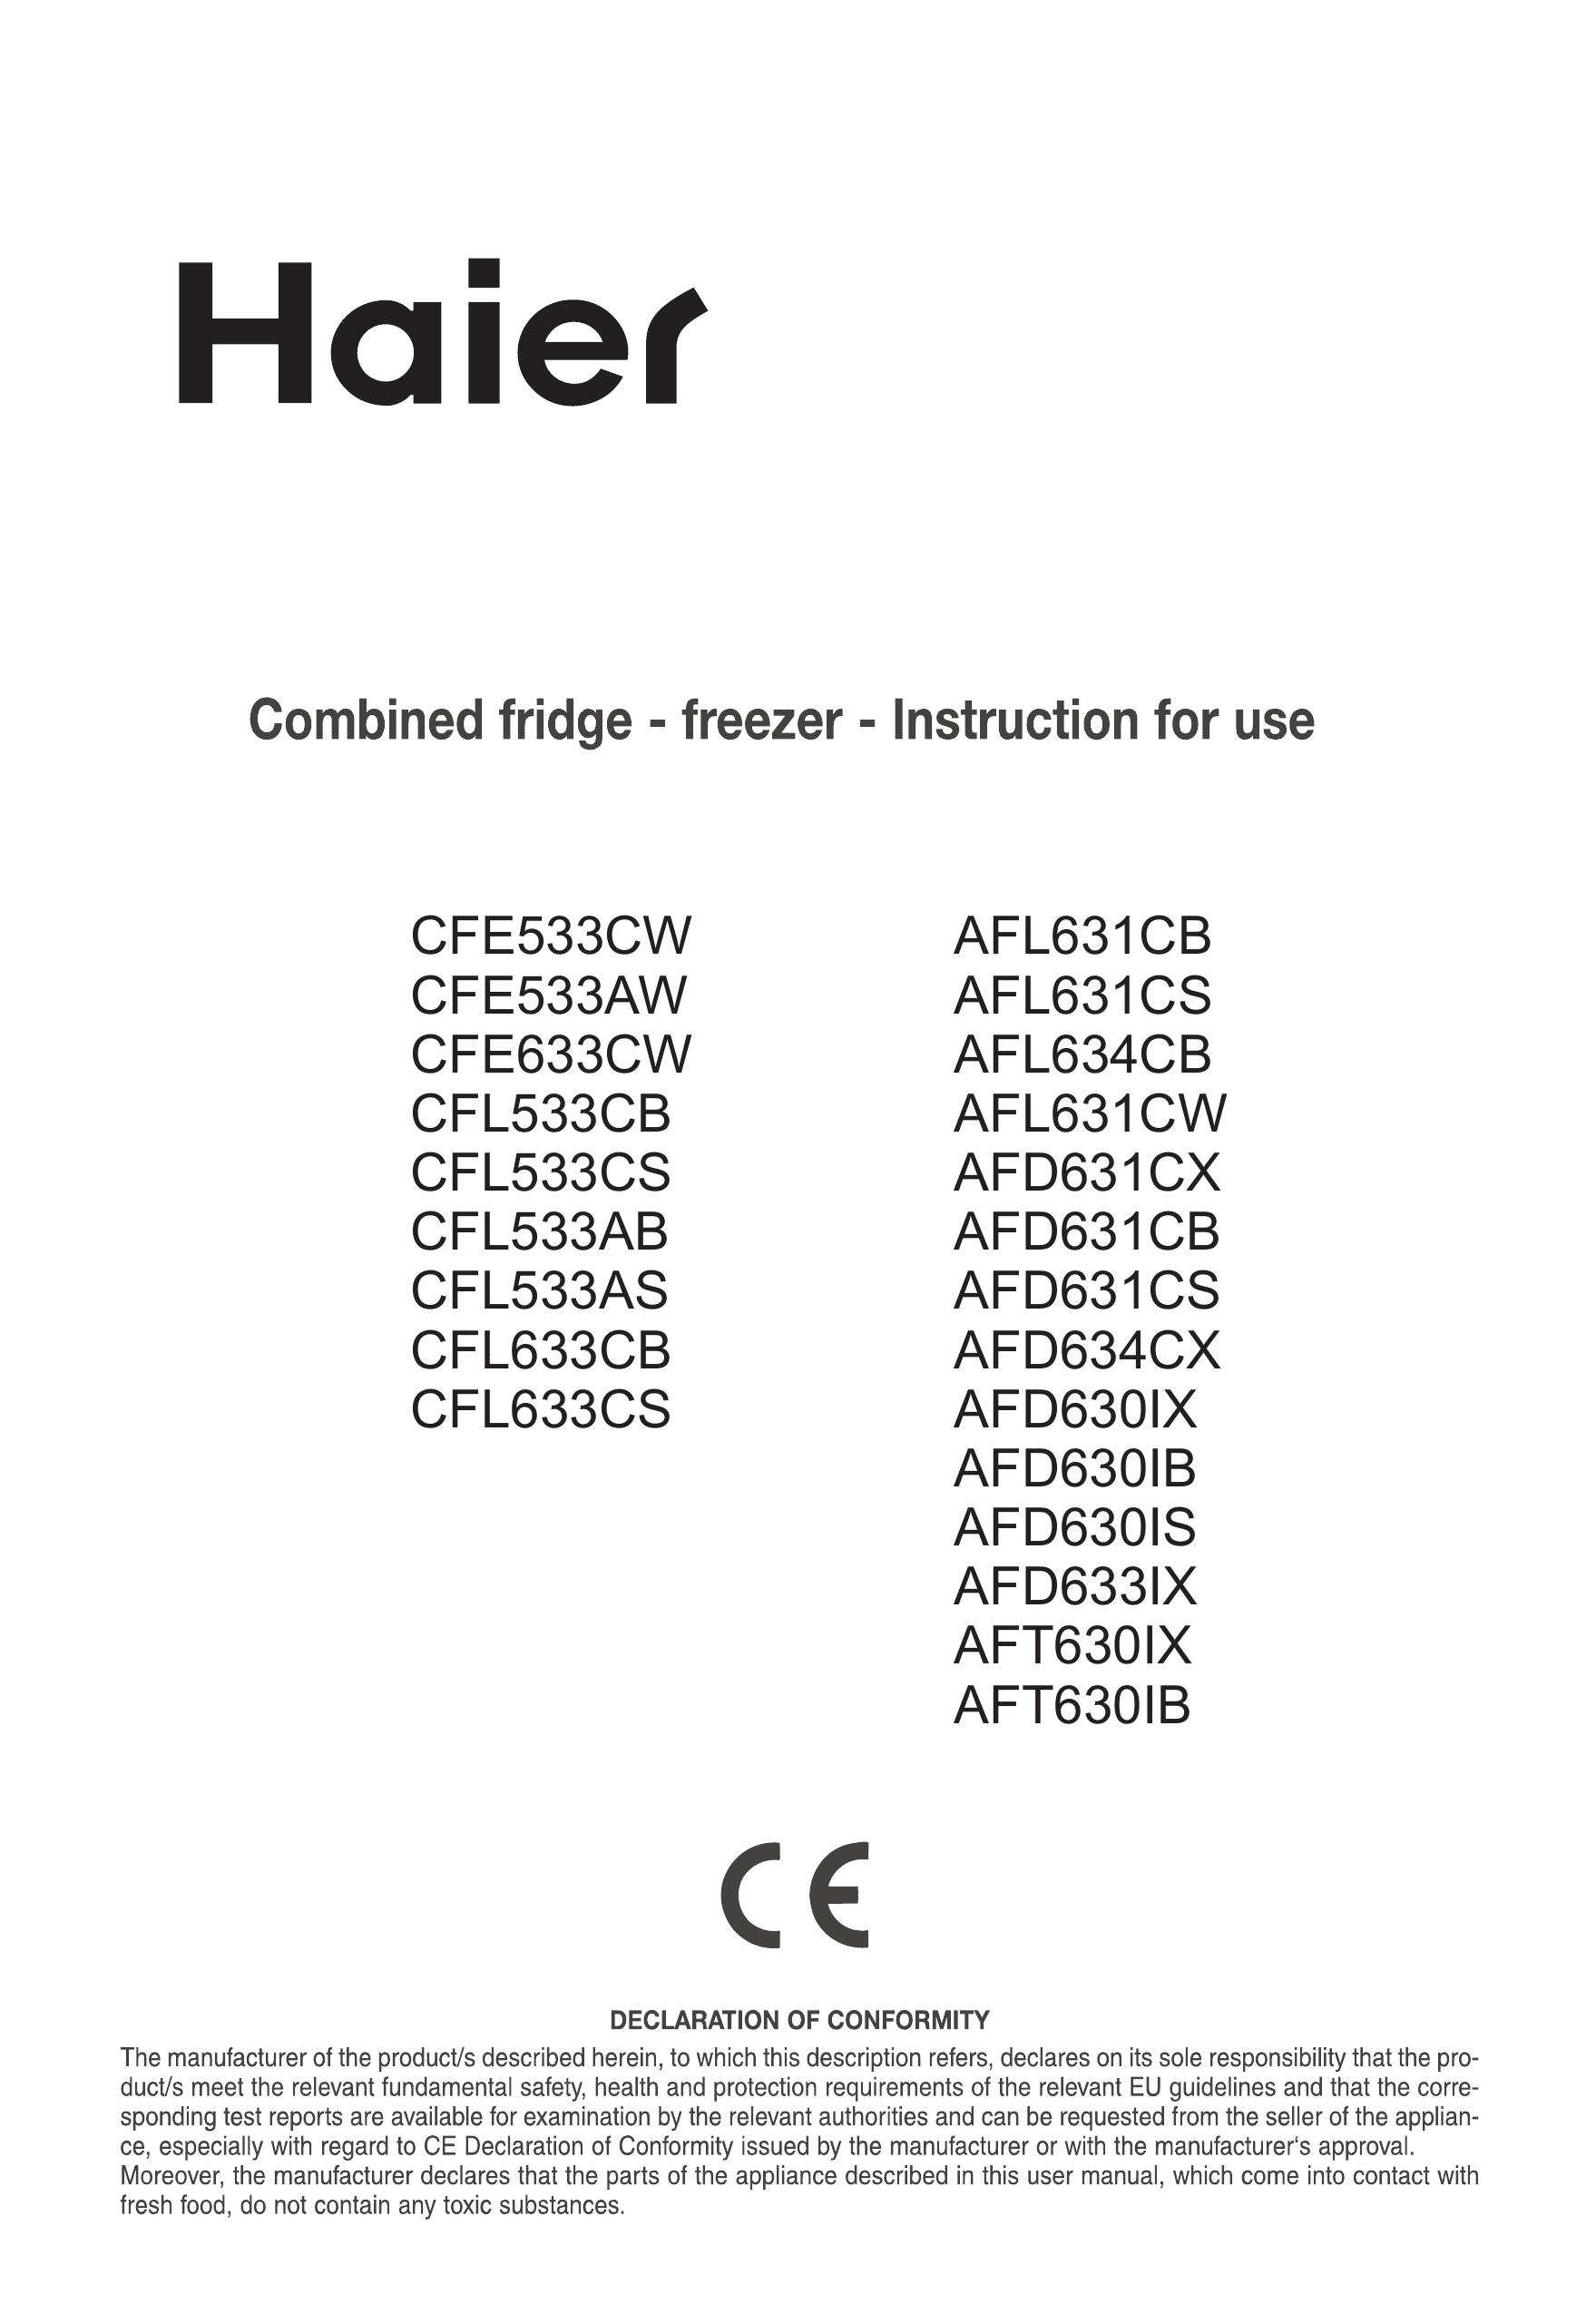 Haier AFD630IB Refrigerator User Manual